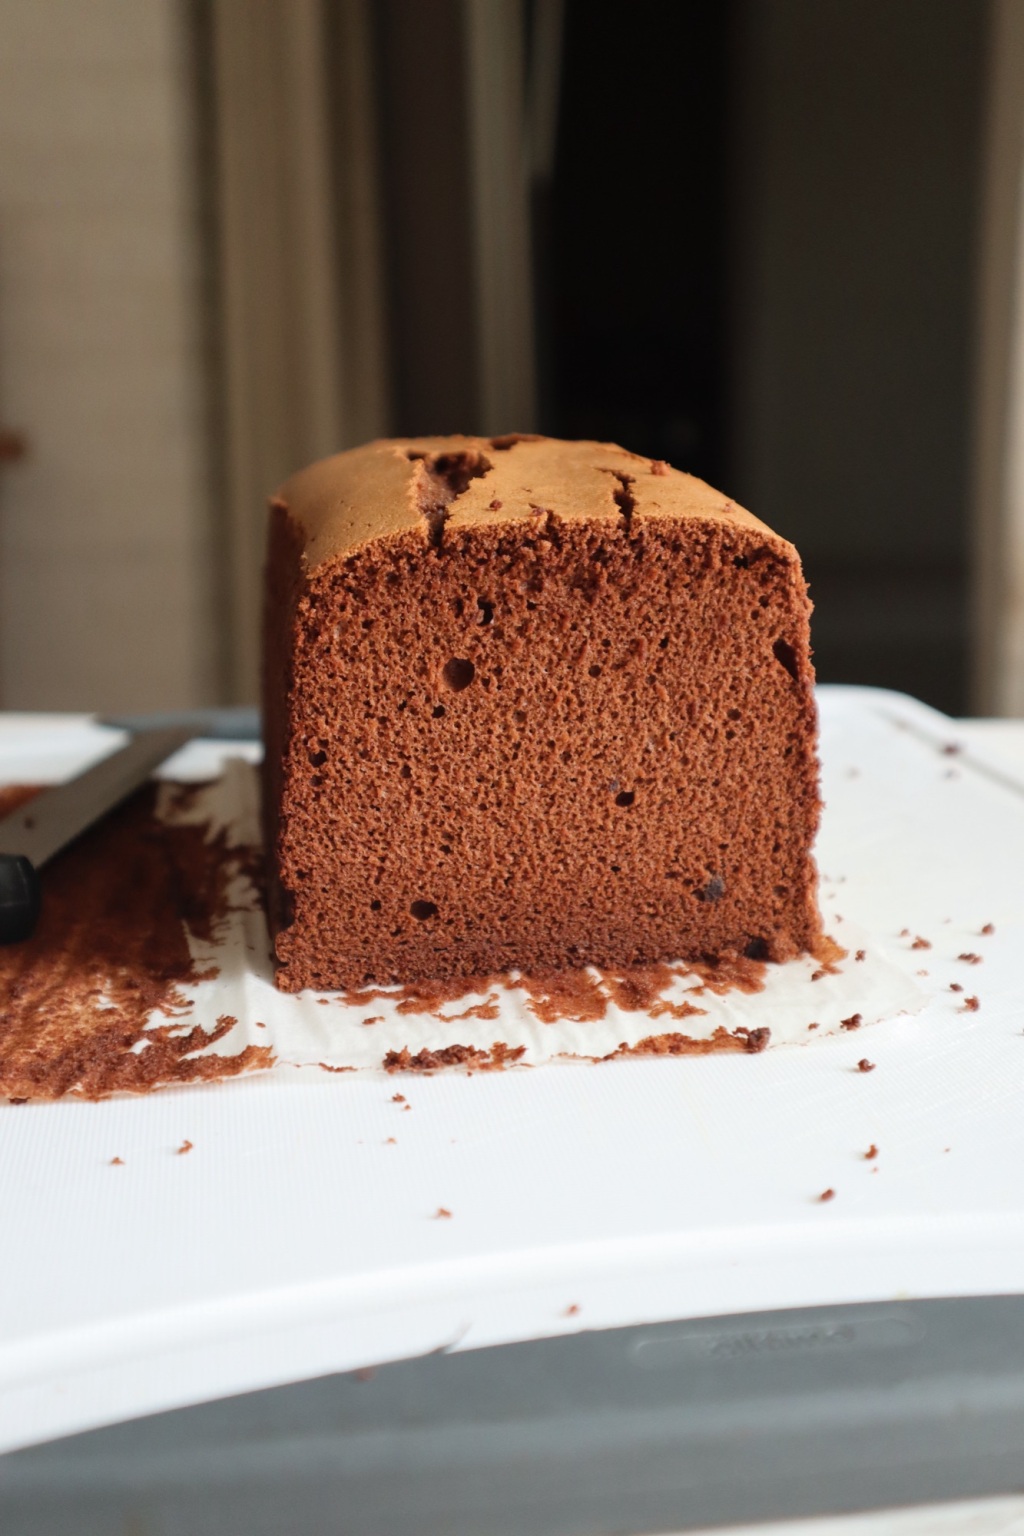 Chocolate Sponge Cake (softest chocolate cake)